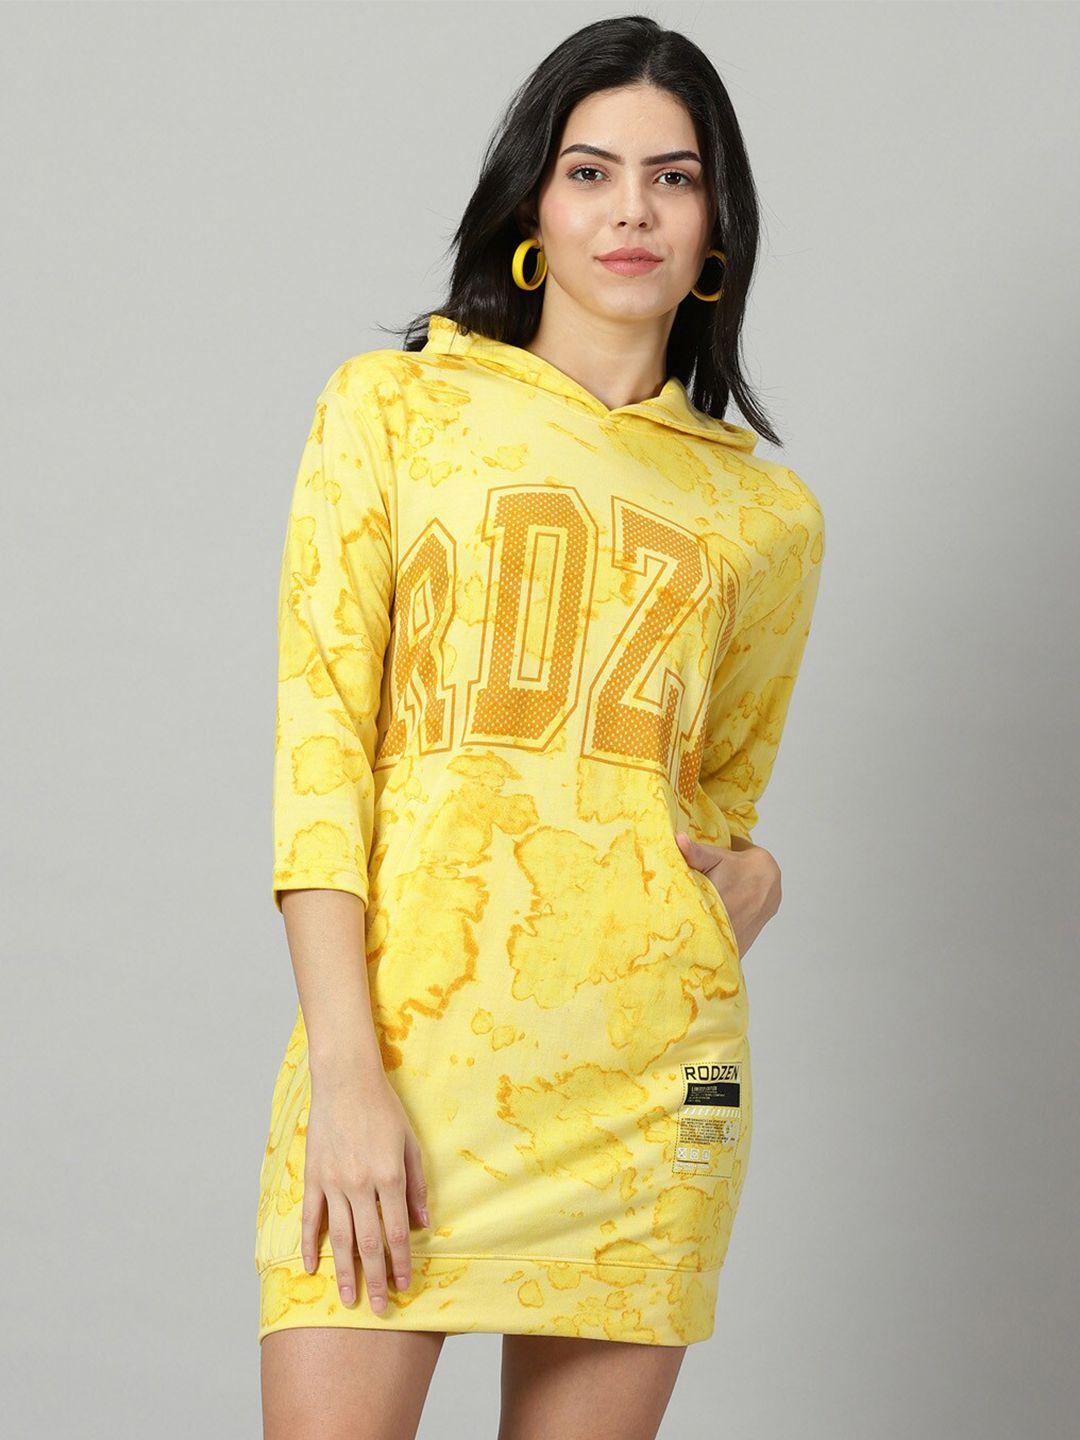 rodzen abstract printed cotton hooded t-shirt dress